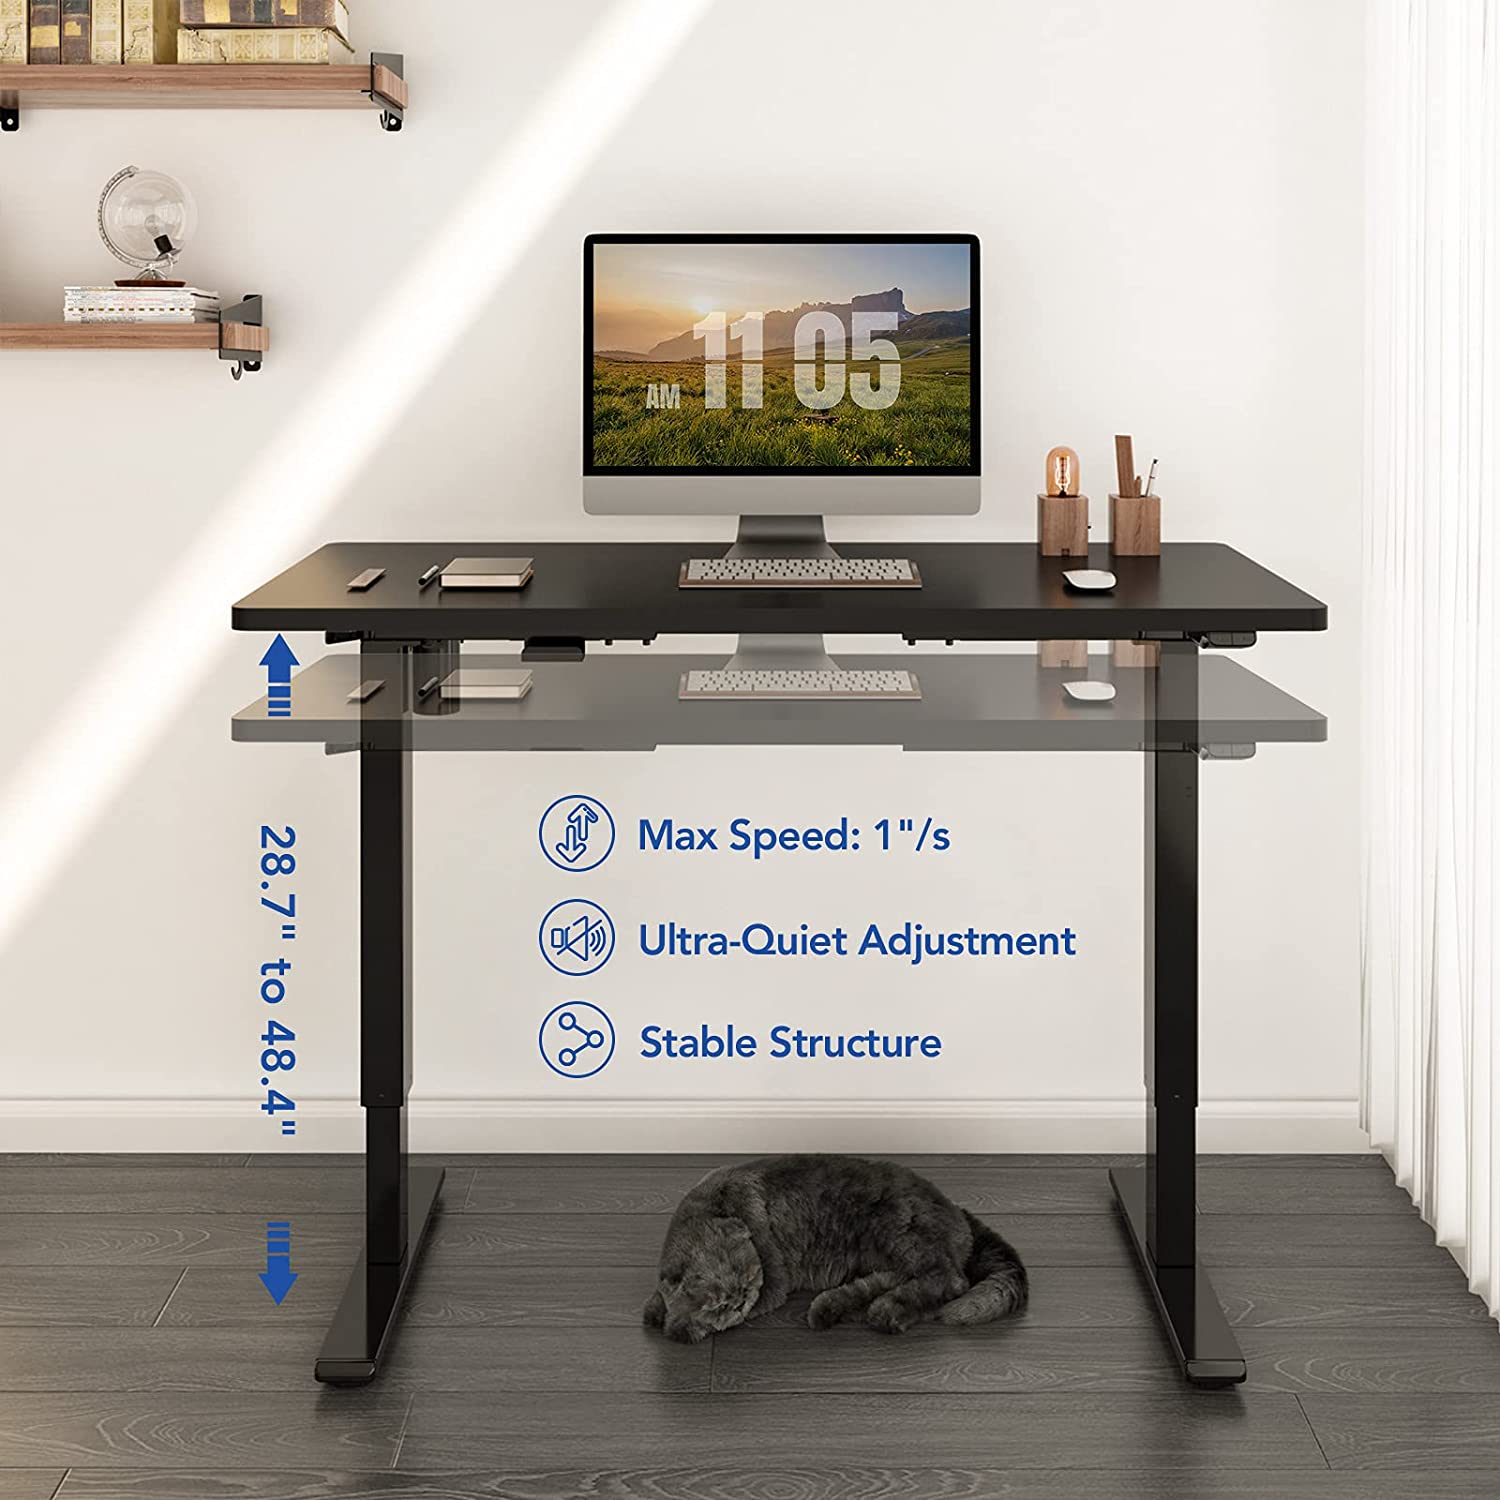 flexispot height adjustable standing desk converter